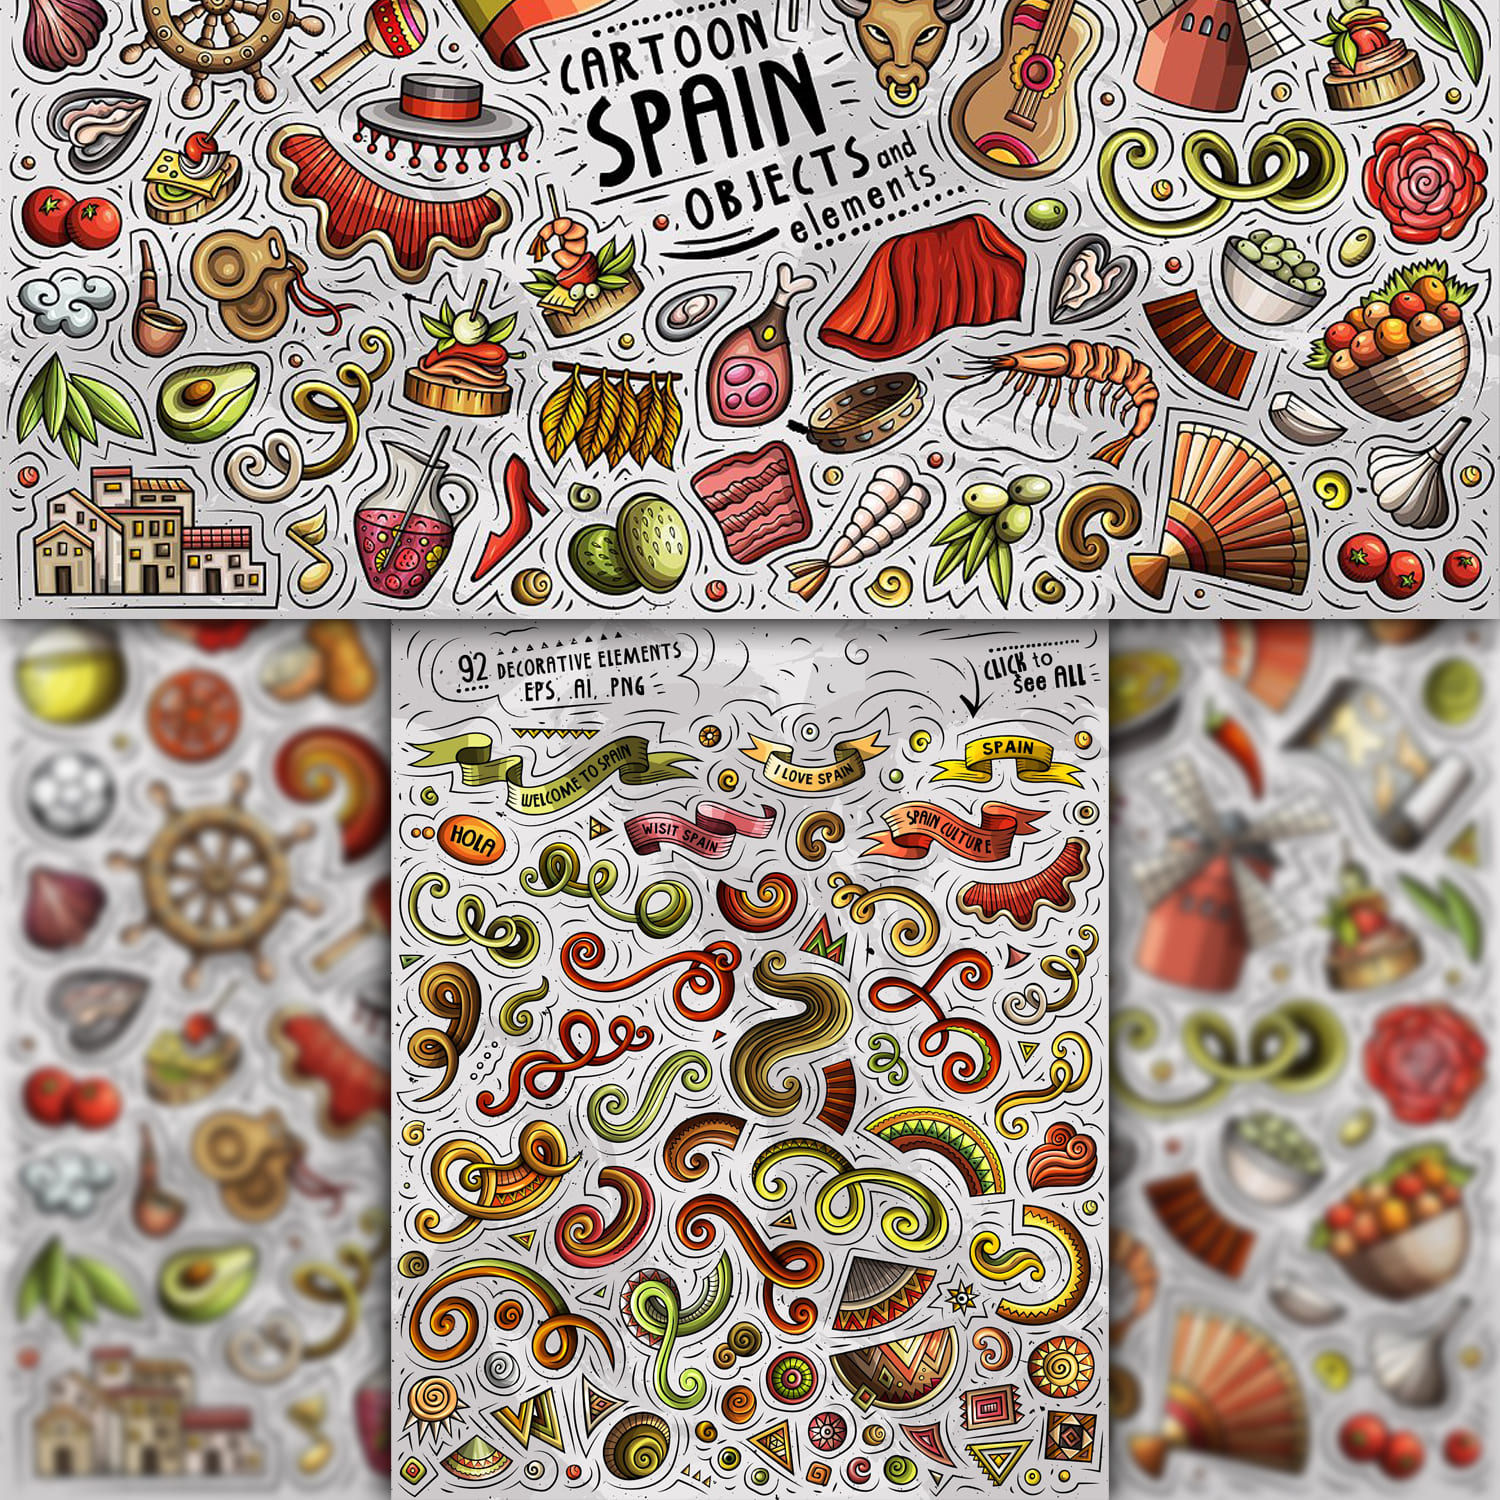 Spain Cartoon Objects Set 1500 1500 2.